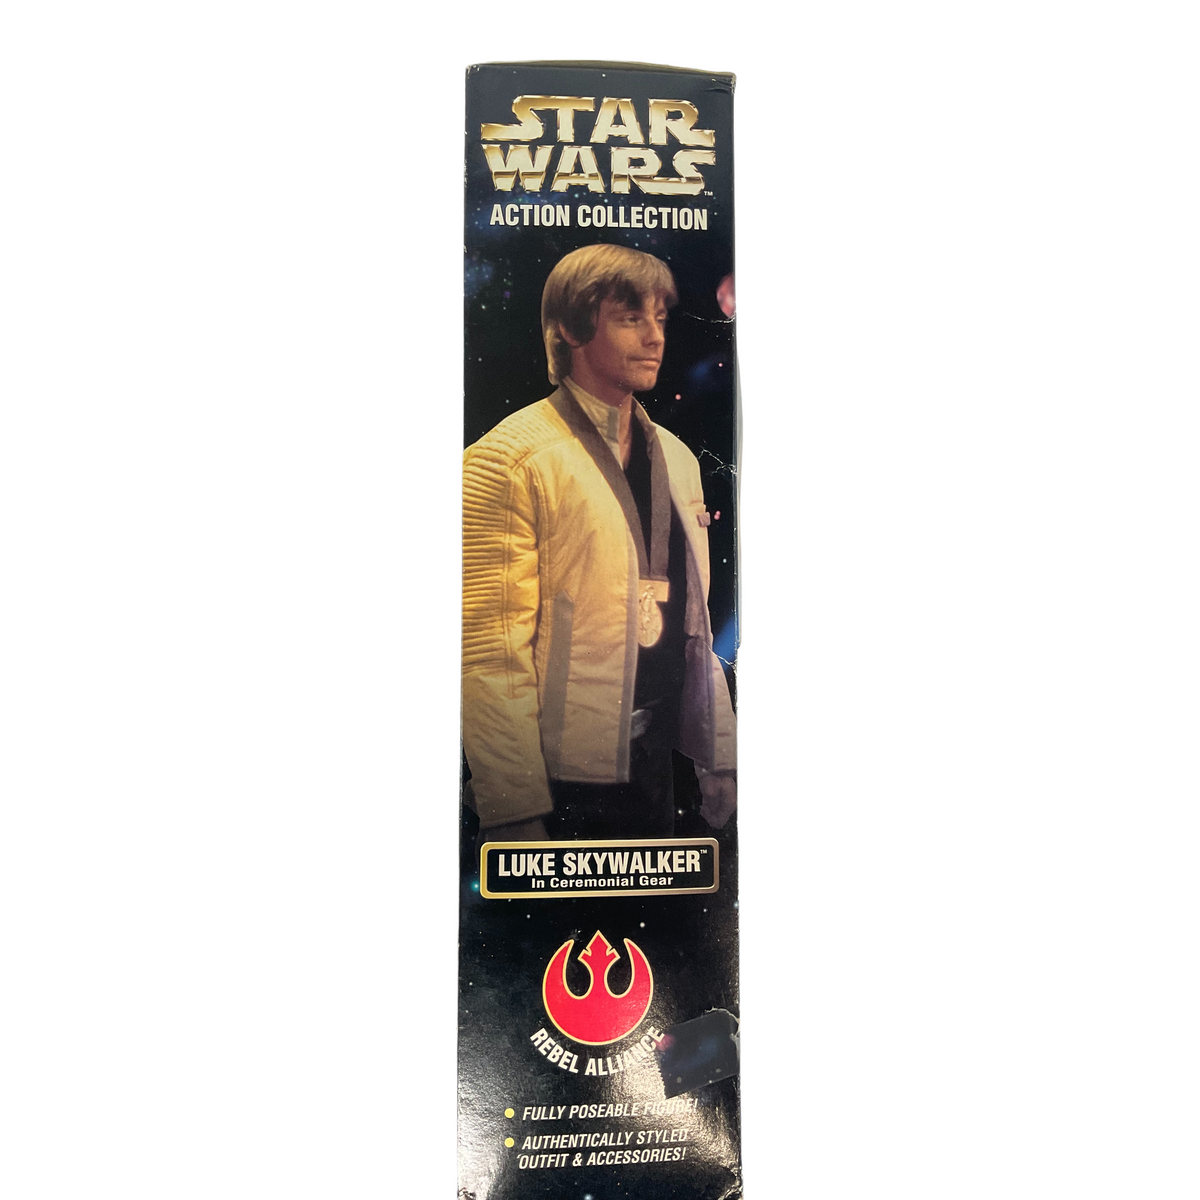 Star Wars Action Collection 12&quot; Luke Skywalker Figure in Ceremonial Gear